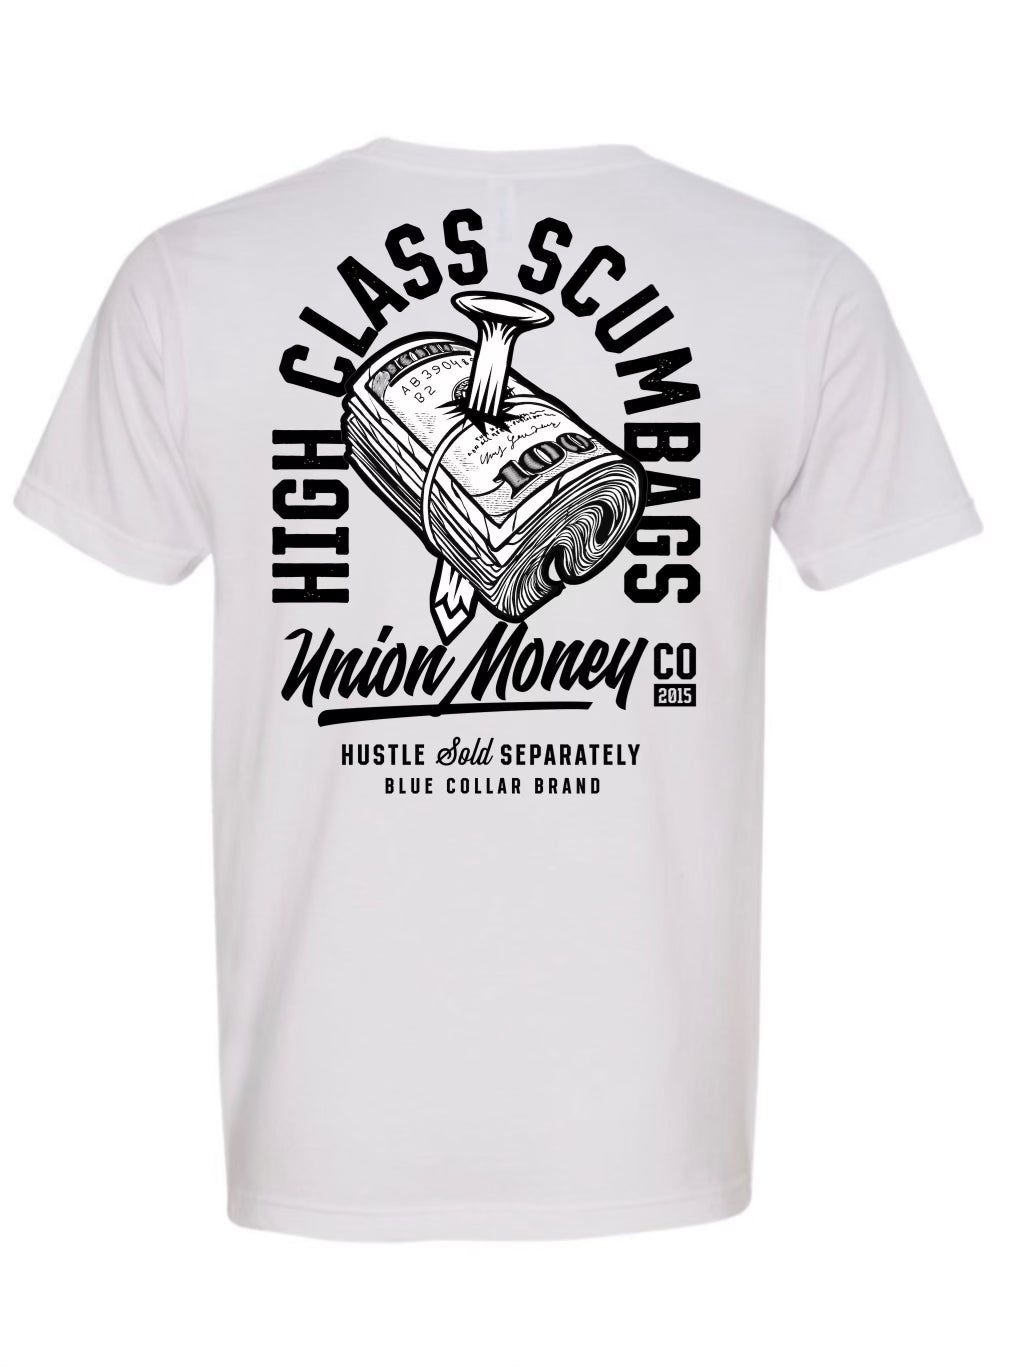 High Class Scumbags Money Roll sticker – UNION MONEY CO